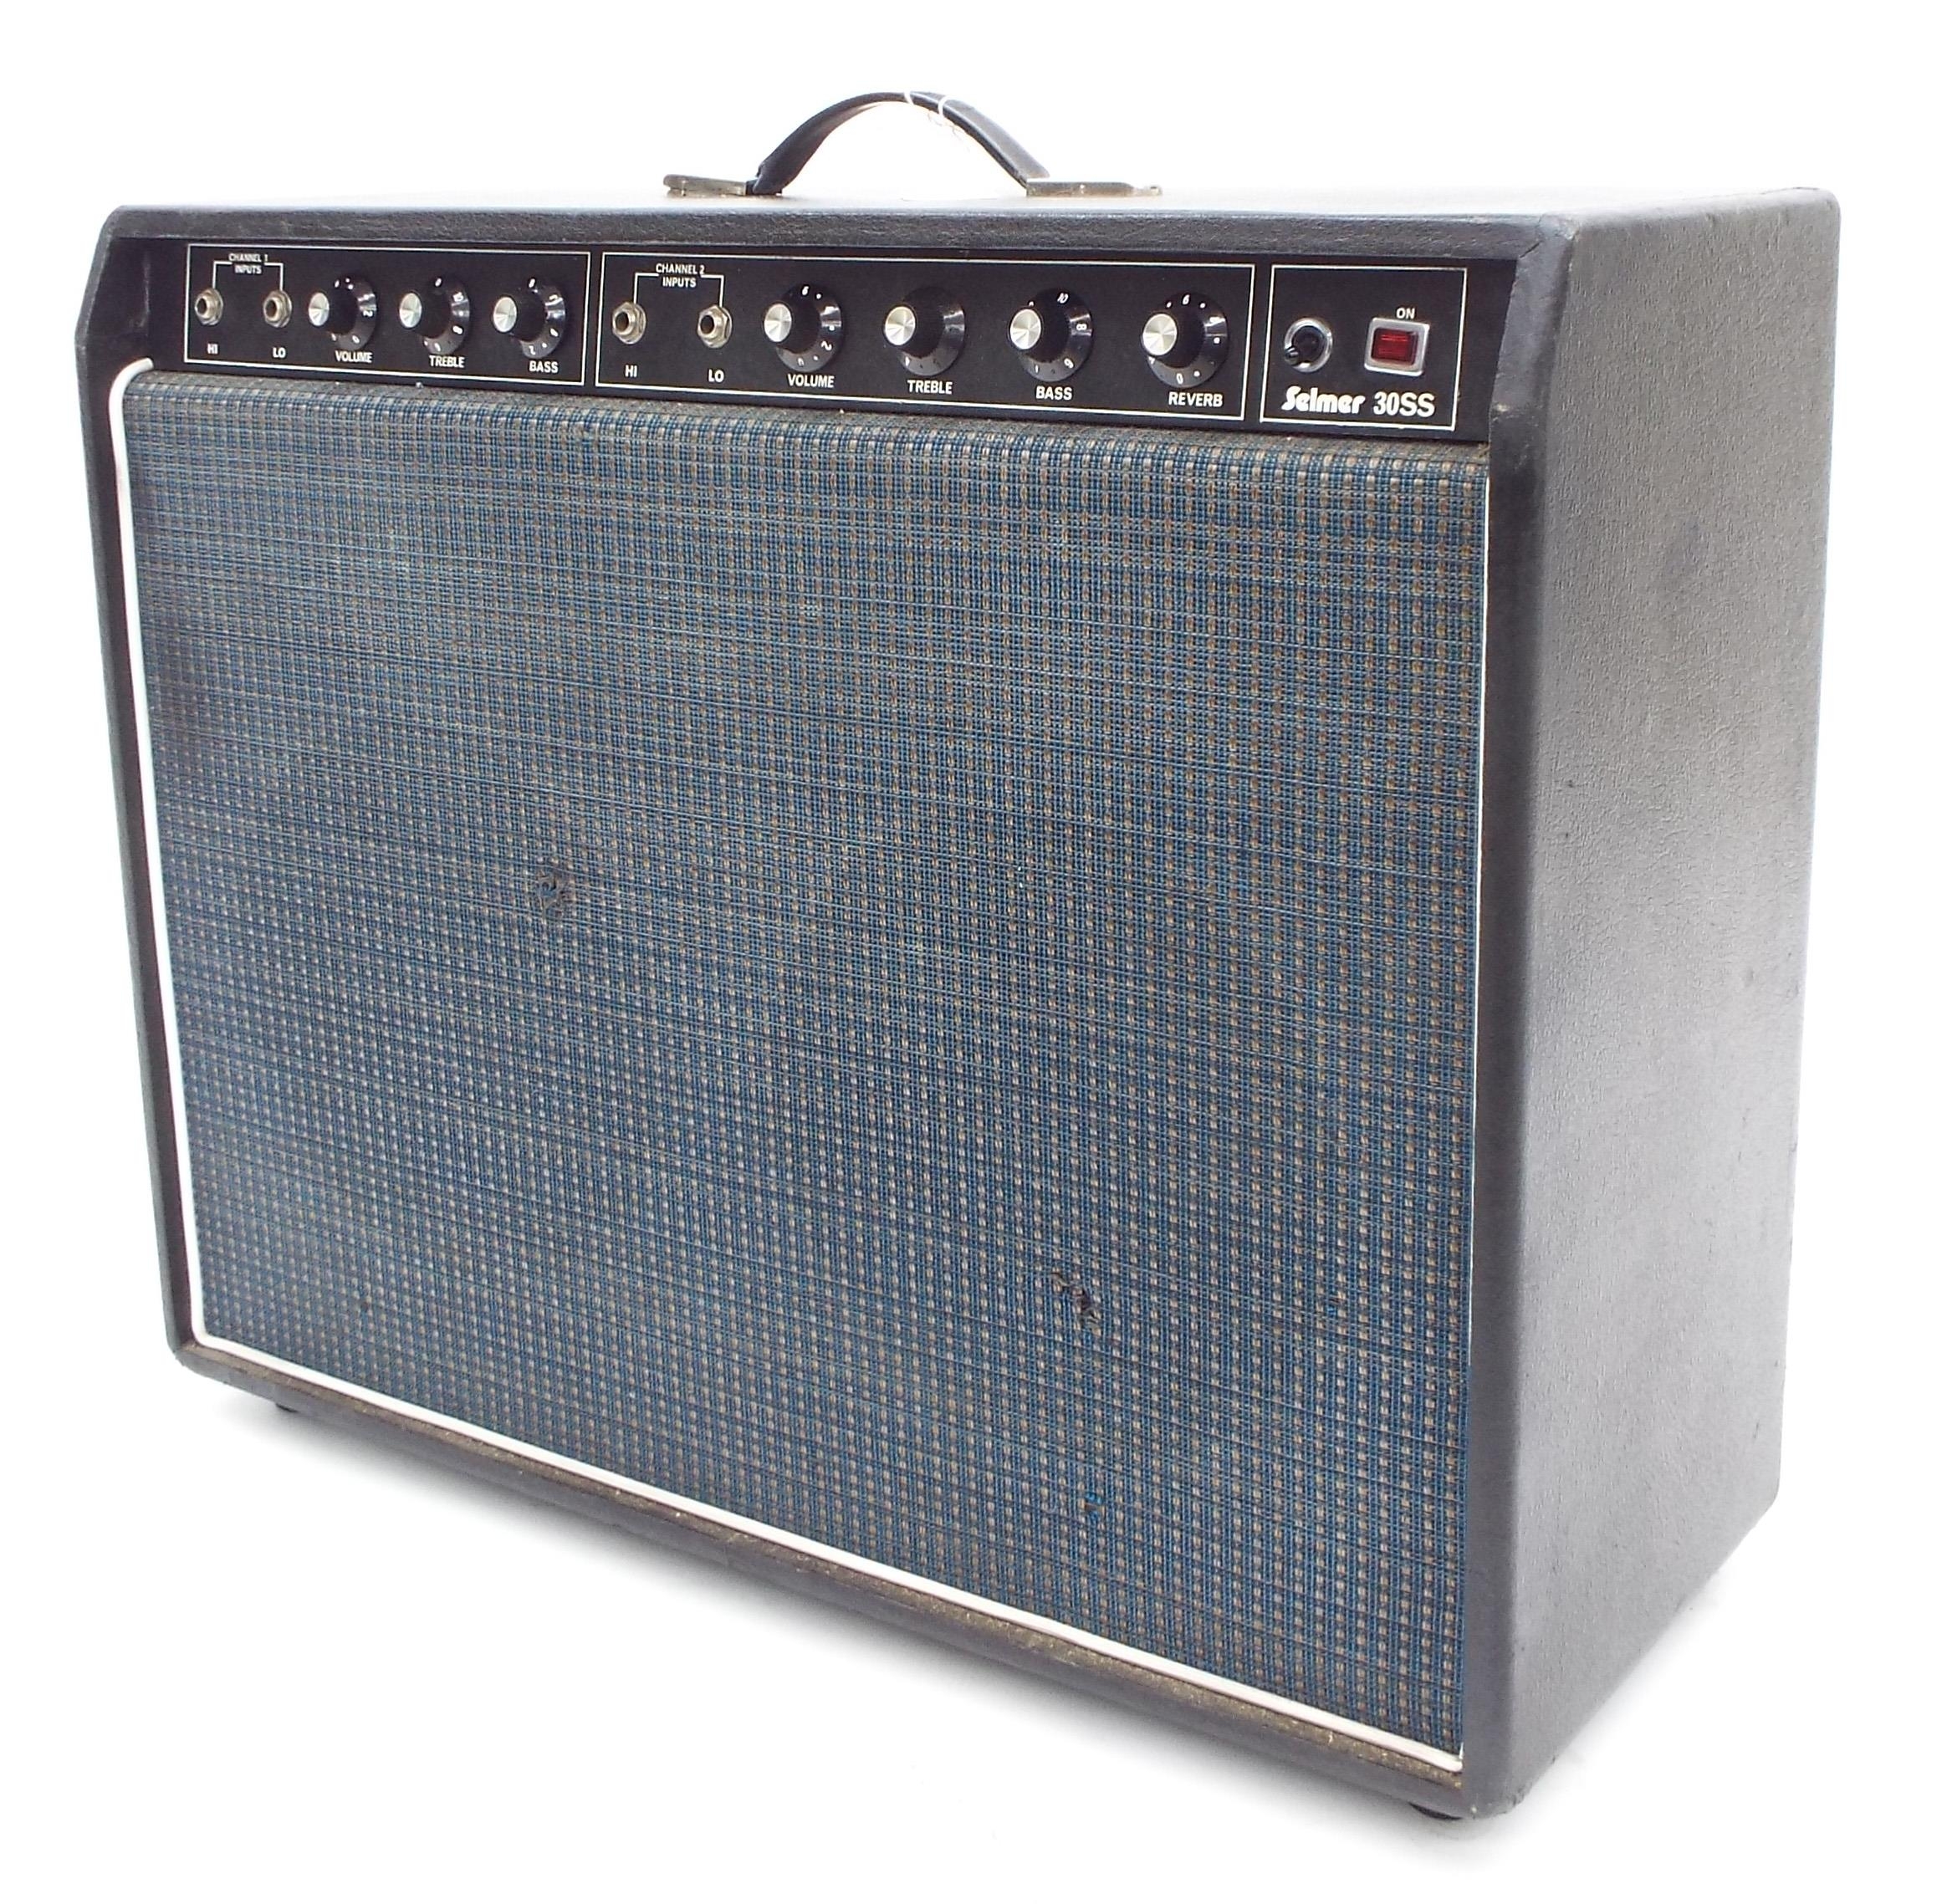 Selmer 30SS guitar amplifier, made in England, ser. no. 80143